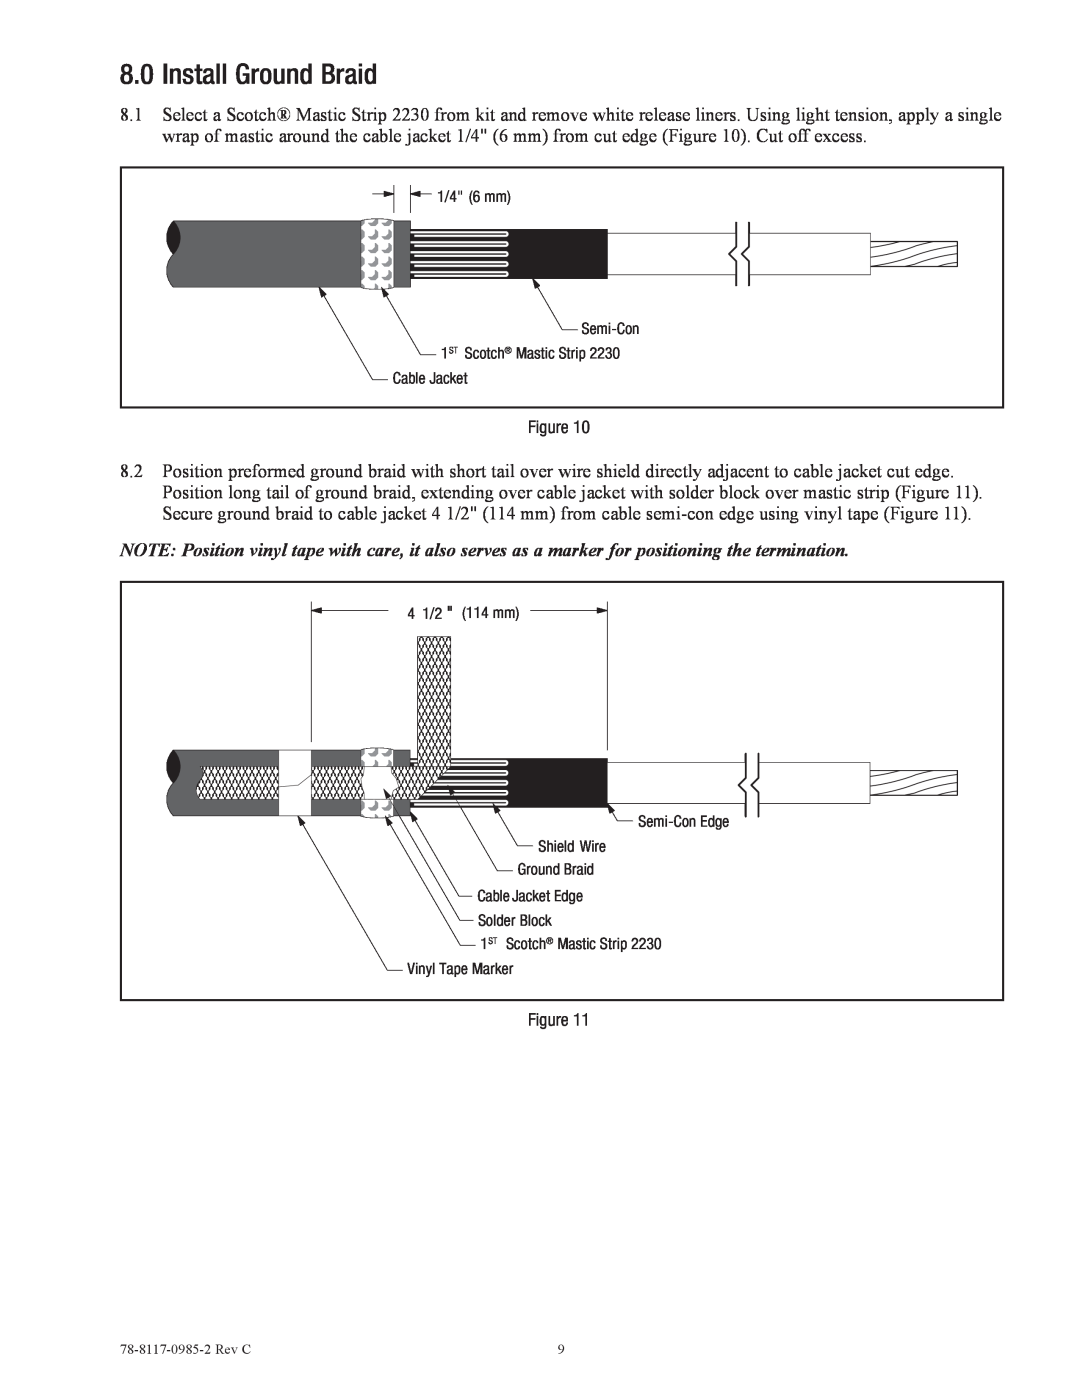 3M 7684-S-8 manual 8.0Install Ground Braid, 1/4 6 mm, 4 1/2, 114 mm, Cable Jacket Edge, Solder Block, Vinyl Tape Marker 